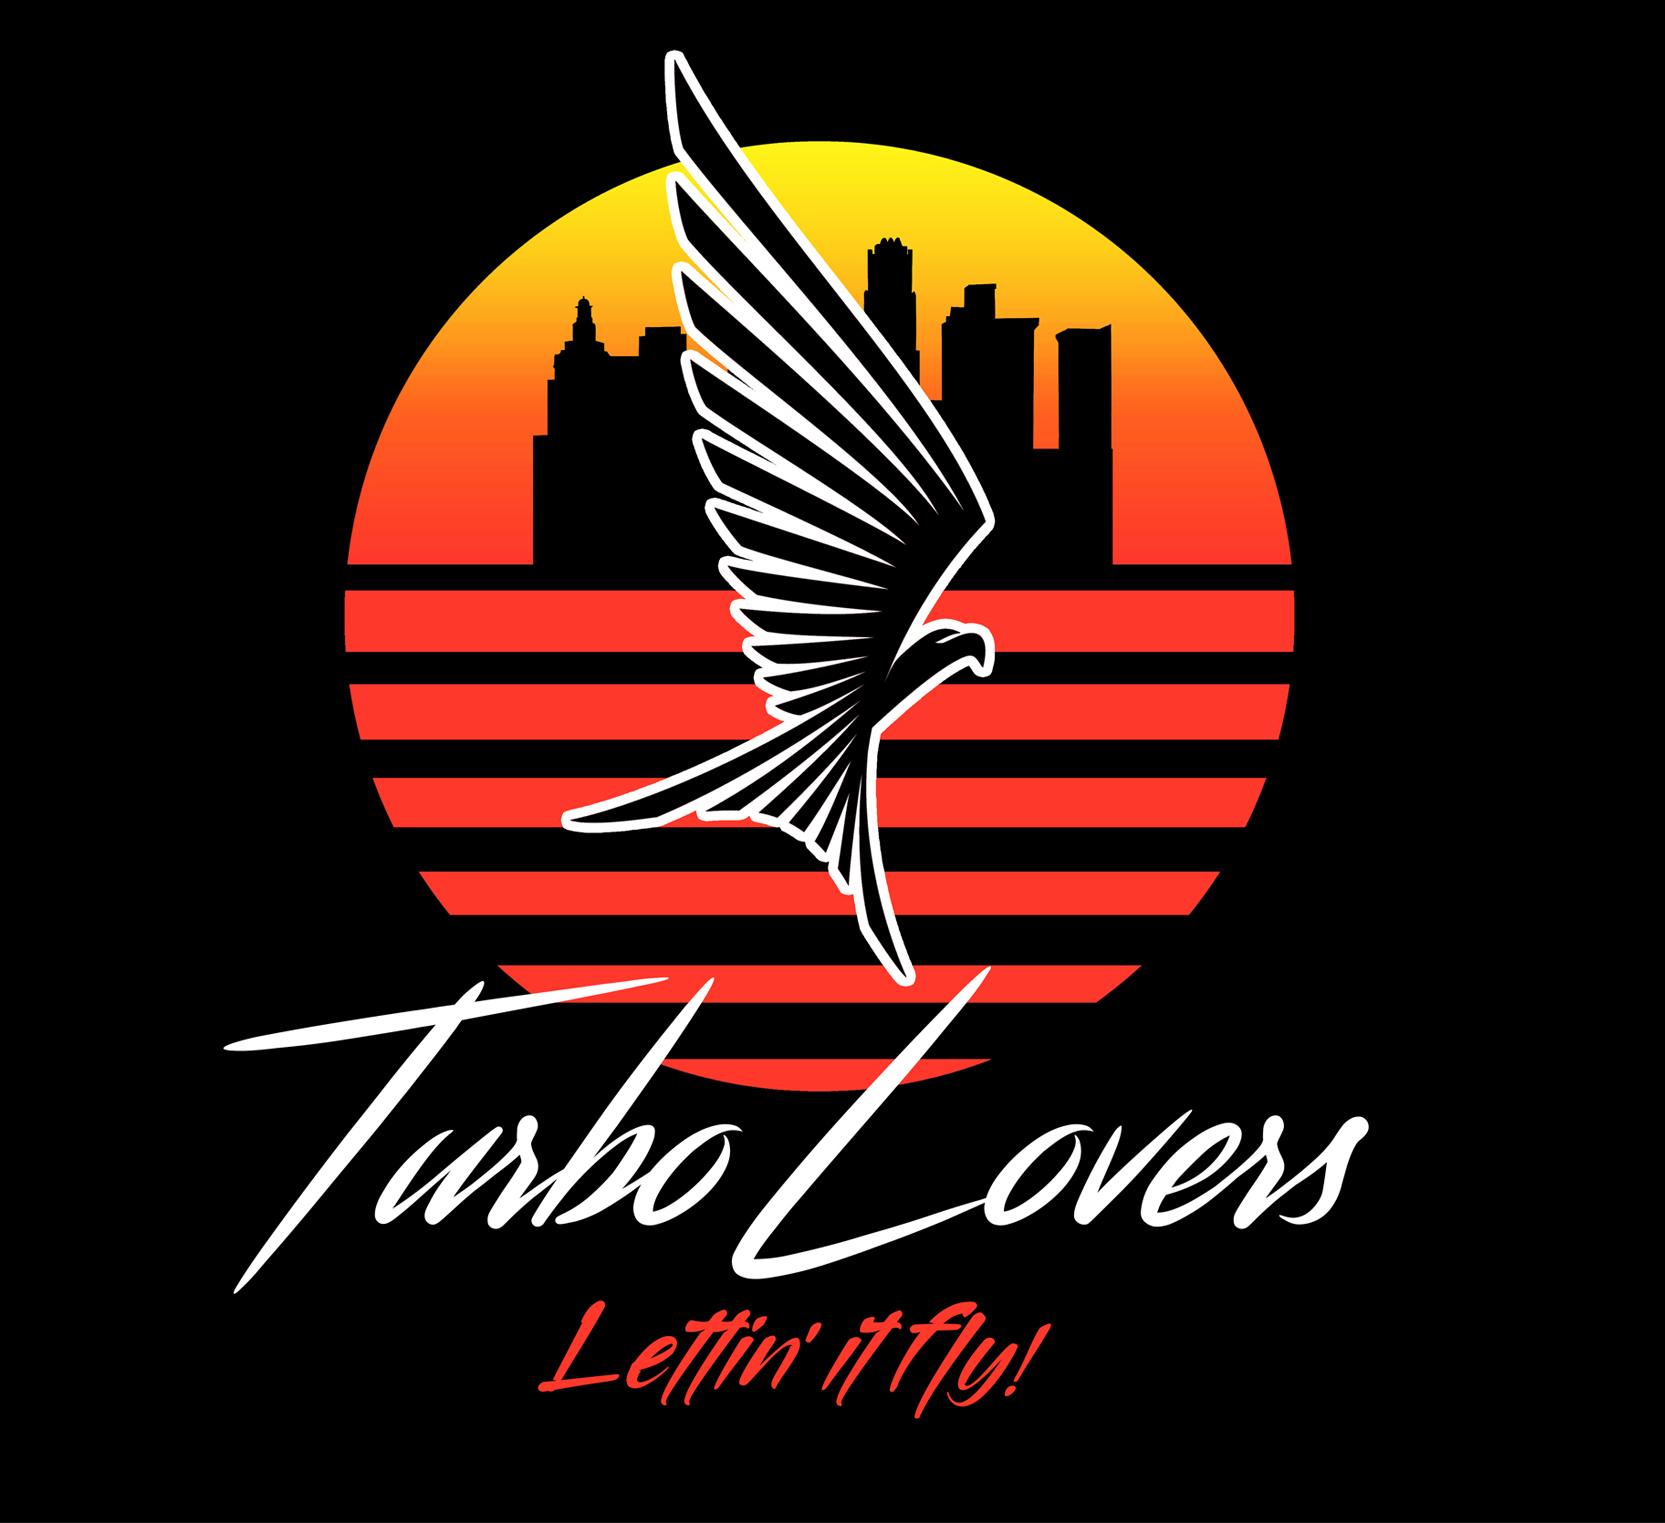 Turbo lovers albumcover